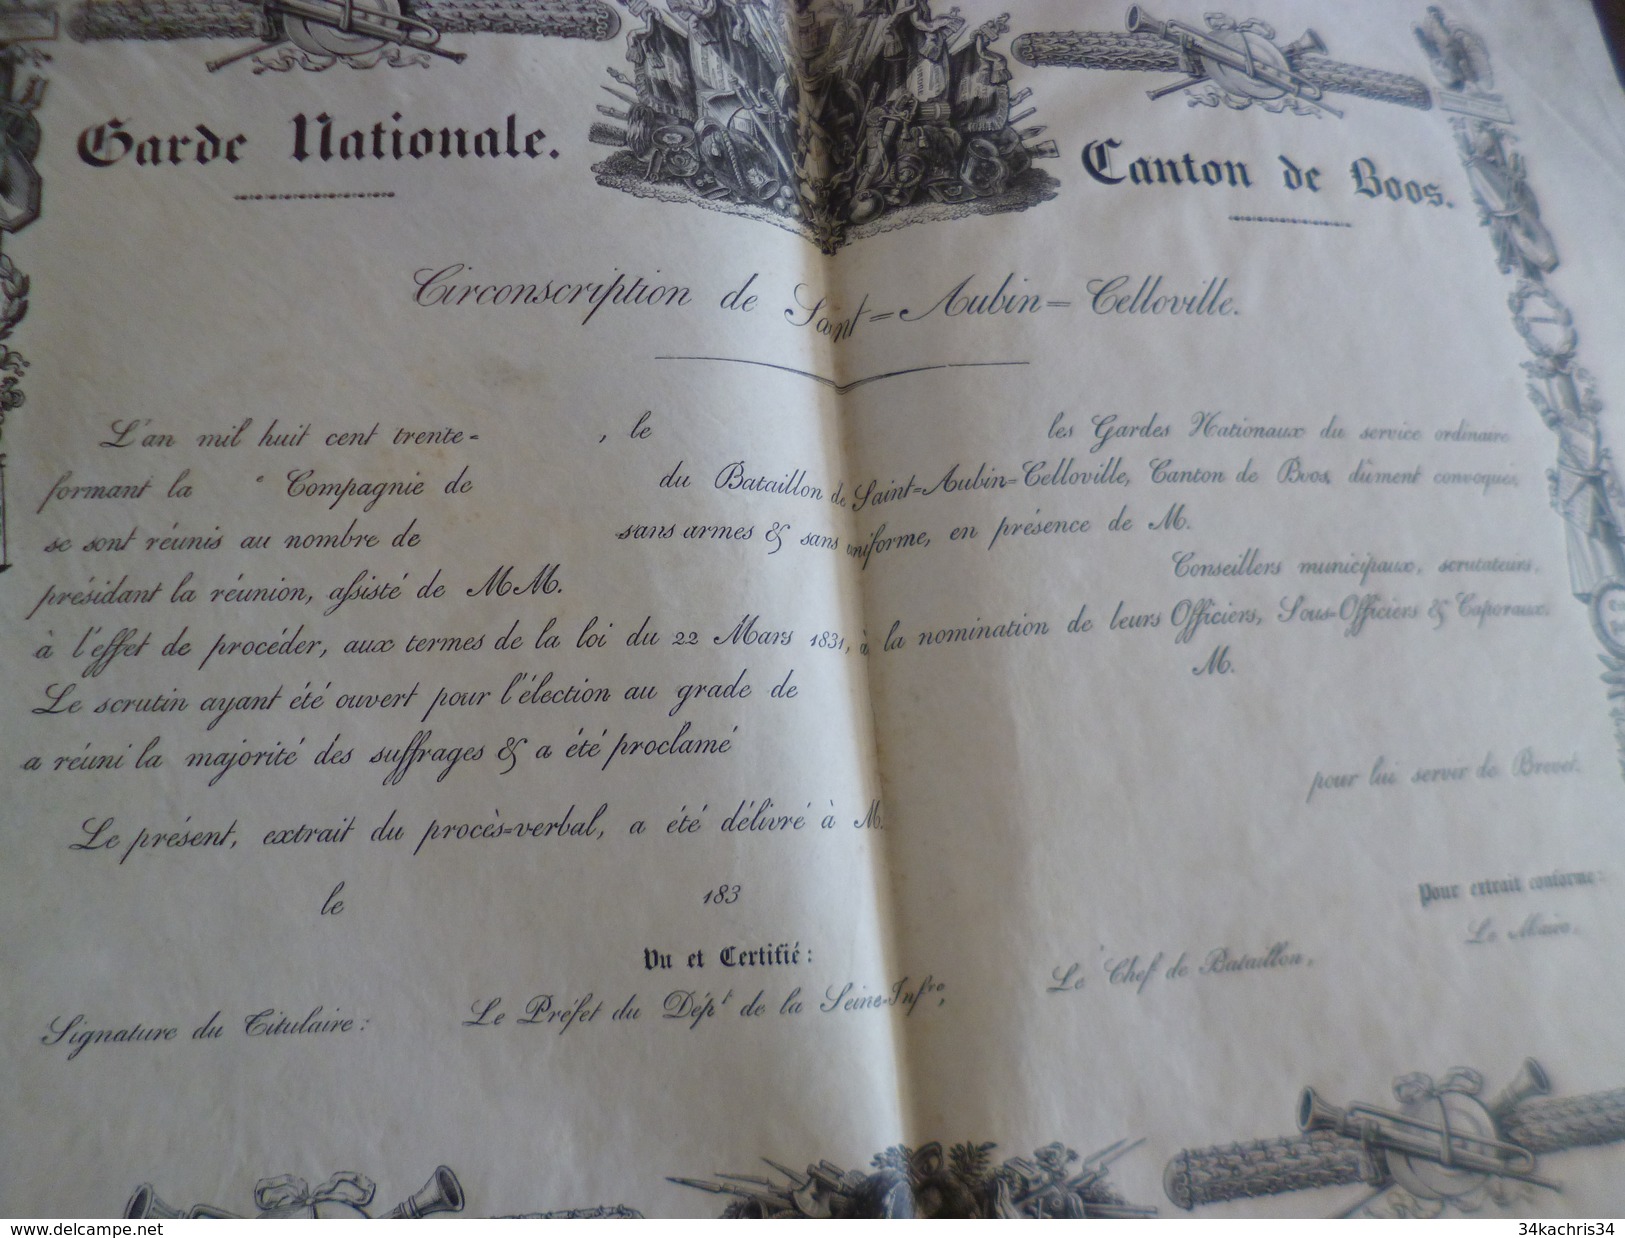 Sur Velin Rare Diplôme Vierge Illustré Garde Nationale Canton De Boos Vers 1830 France Seine Maritime  41,7 X 28.9 TBE - Diploma & School Reports